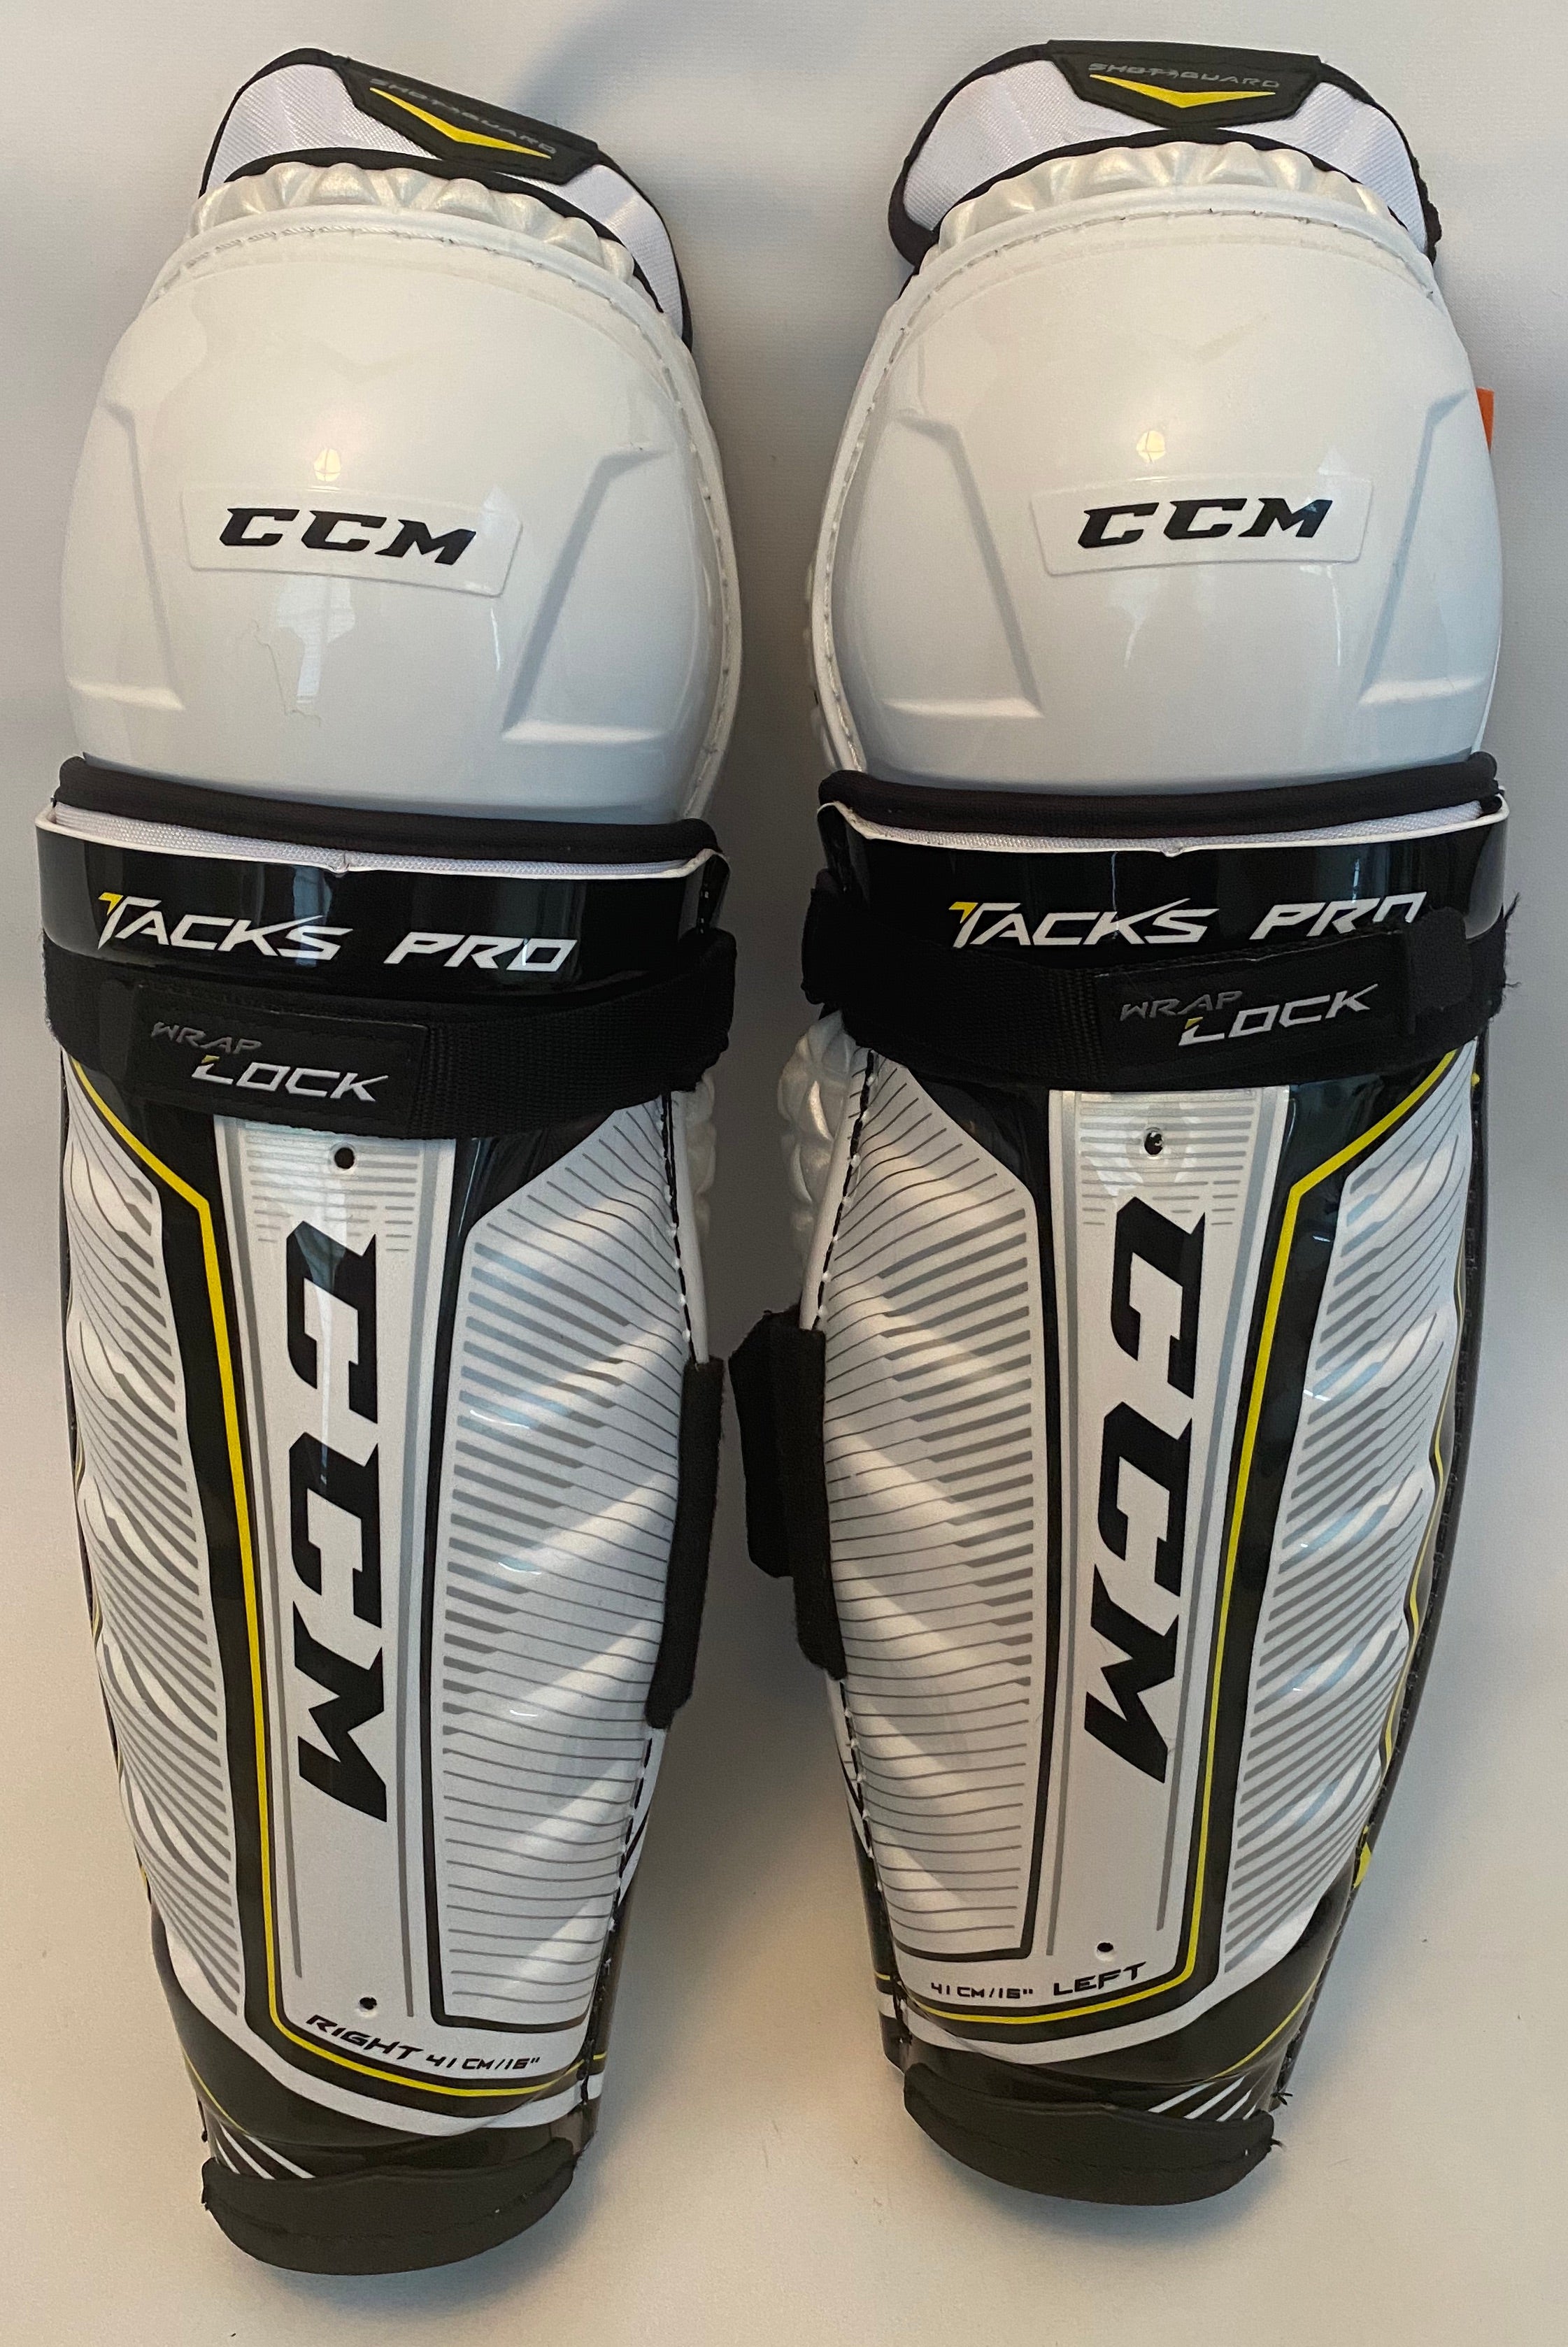 New DR SG80 Pro Sr sz knee pads pad guard ice hockey shin guards senior size 16" 